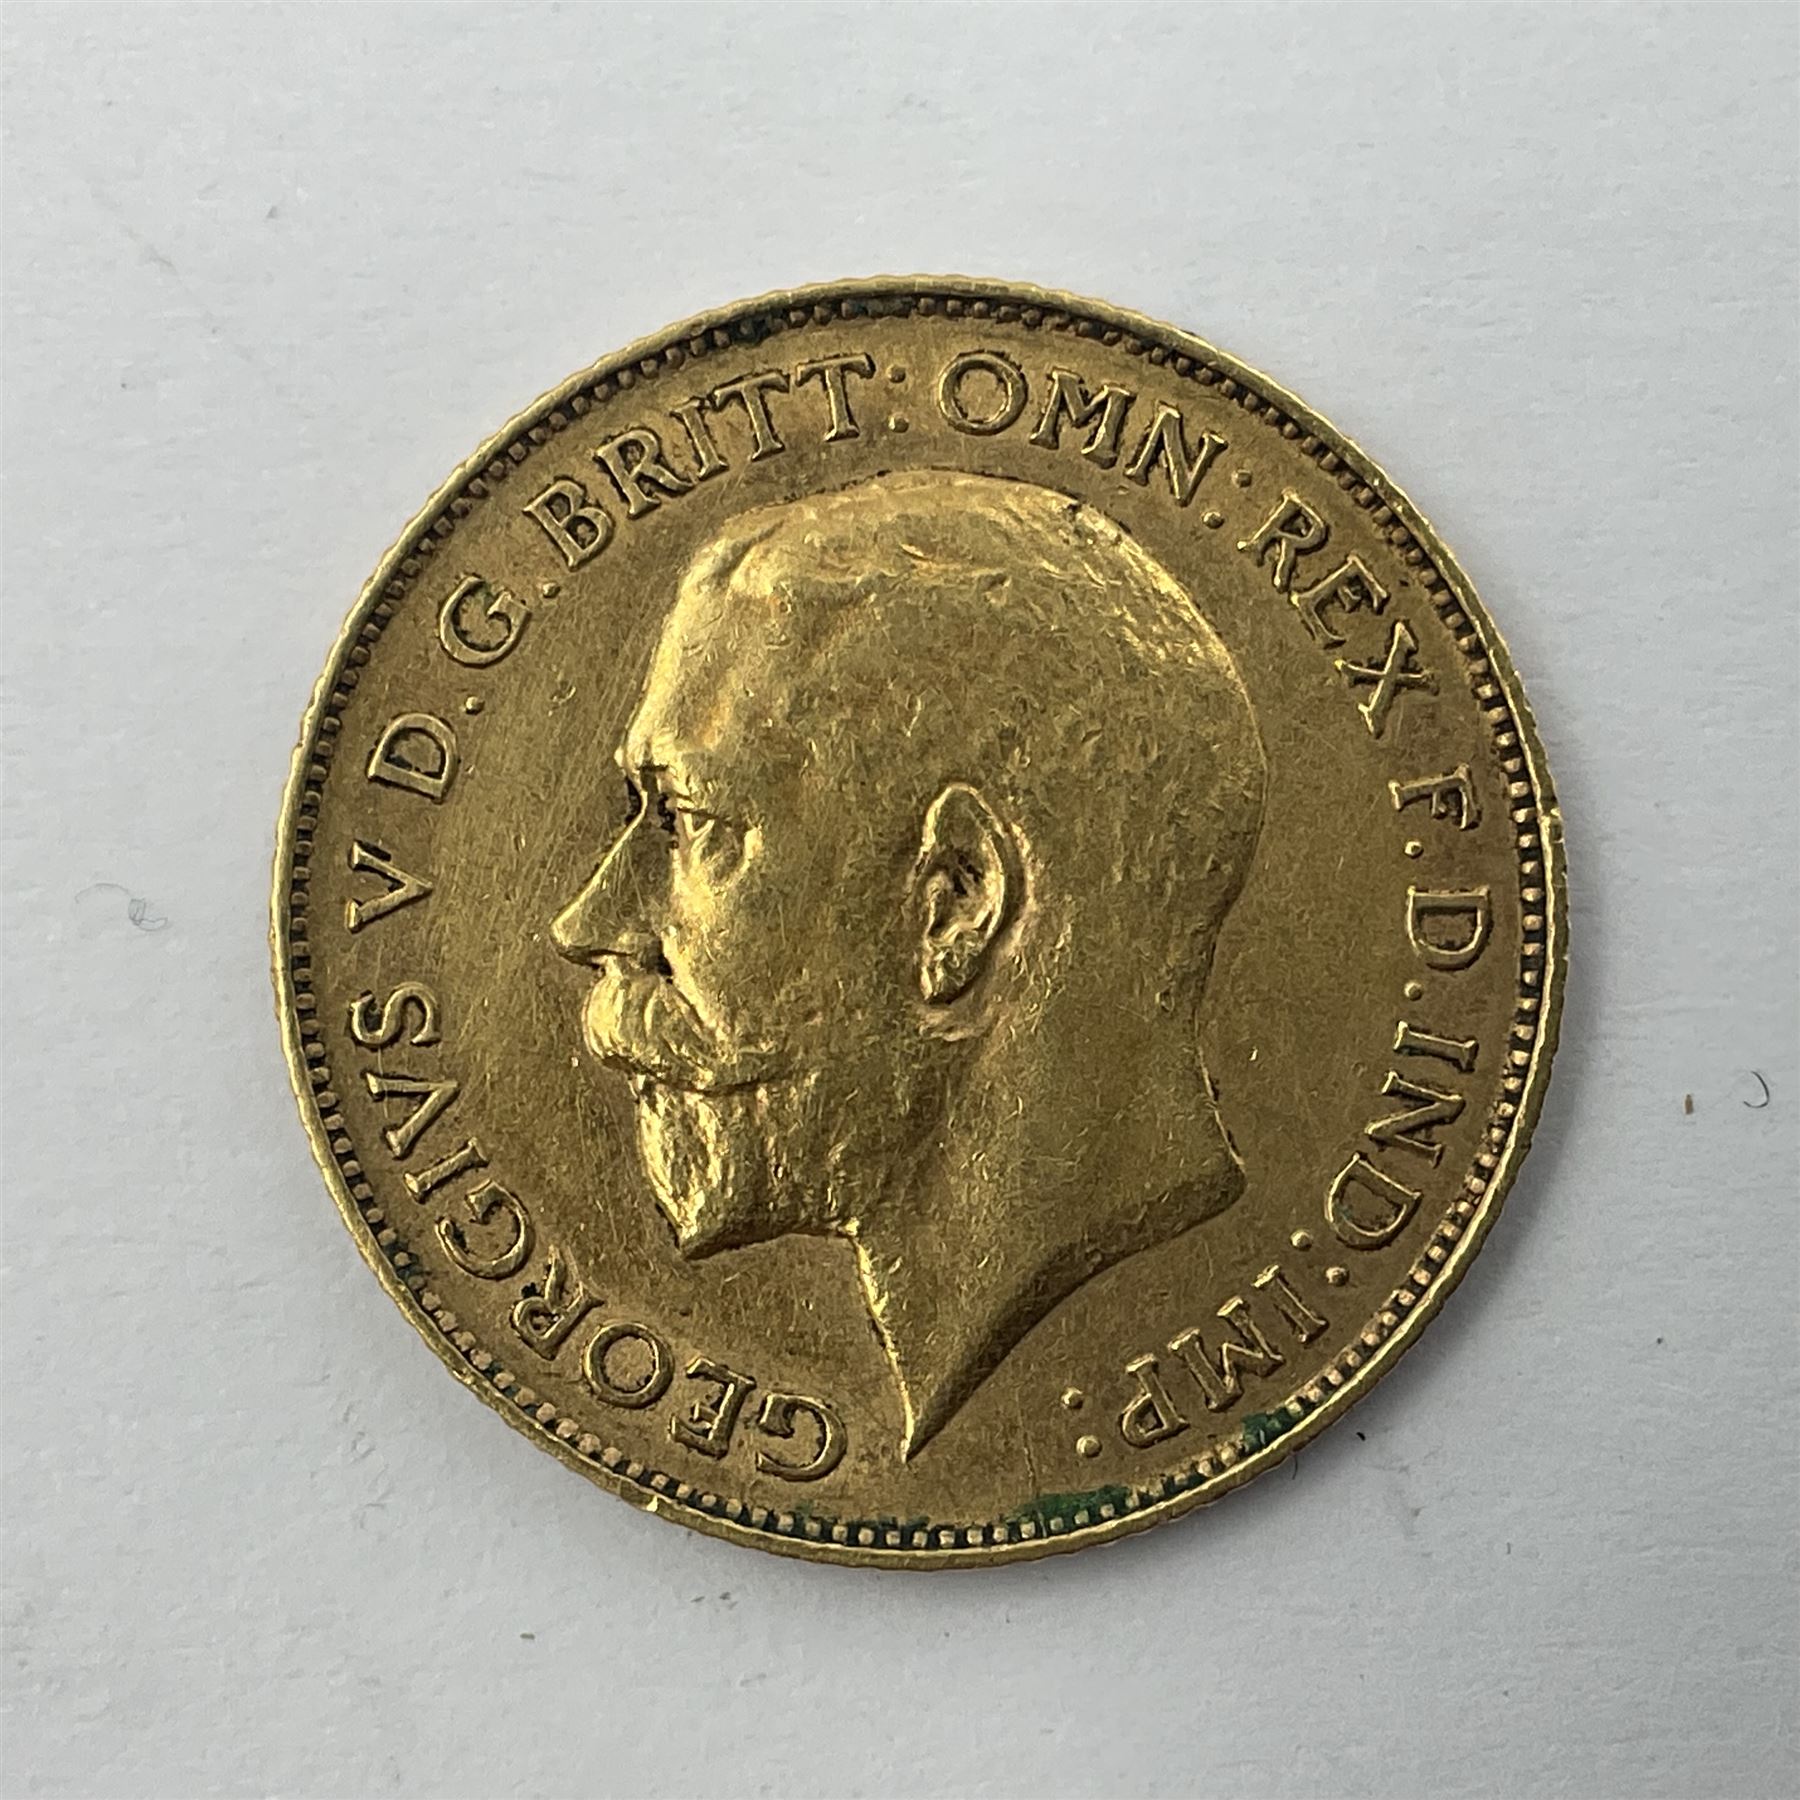 King George V 1911 gold half sovereign coin - Image 3 of 3